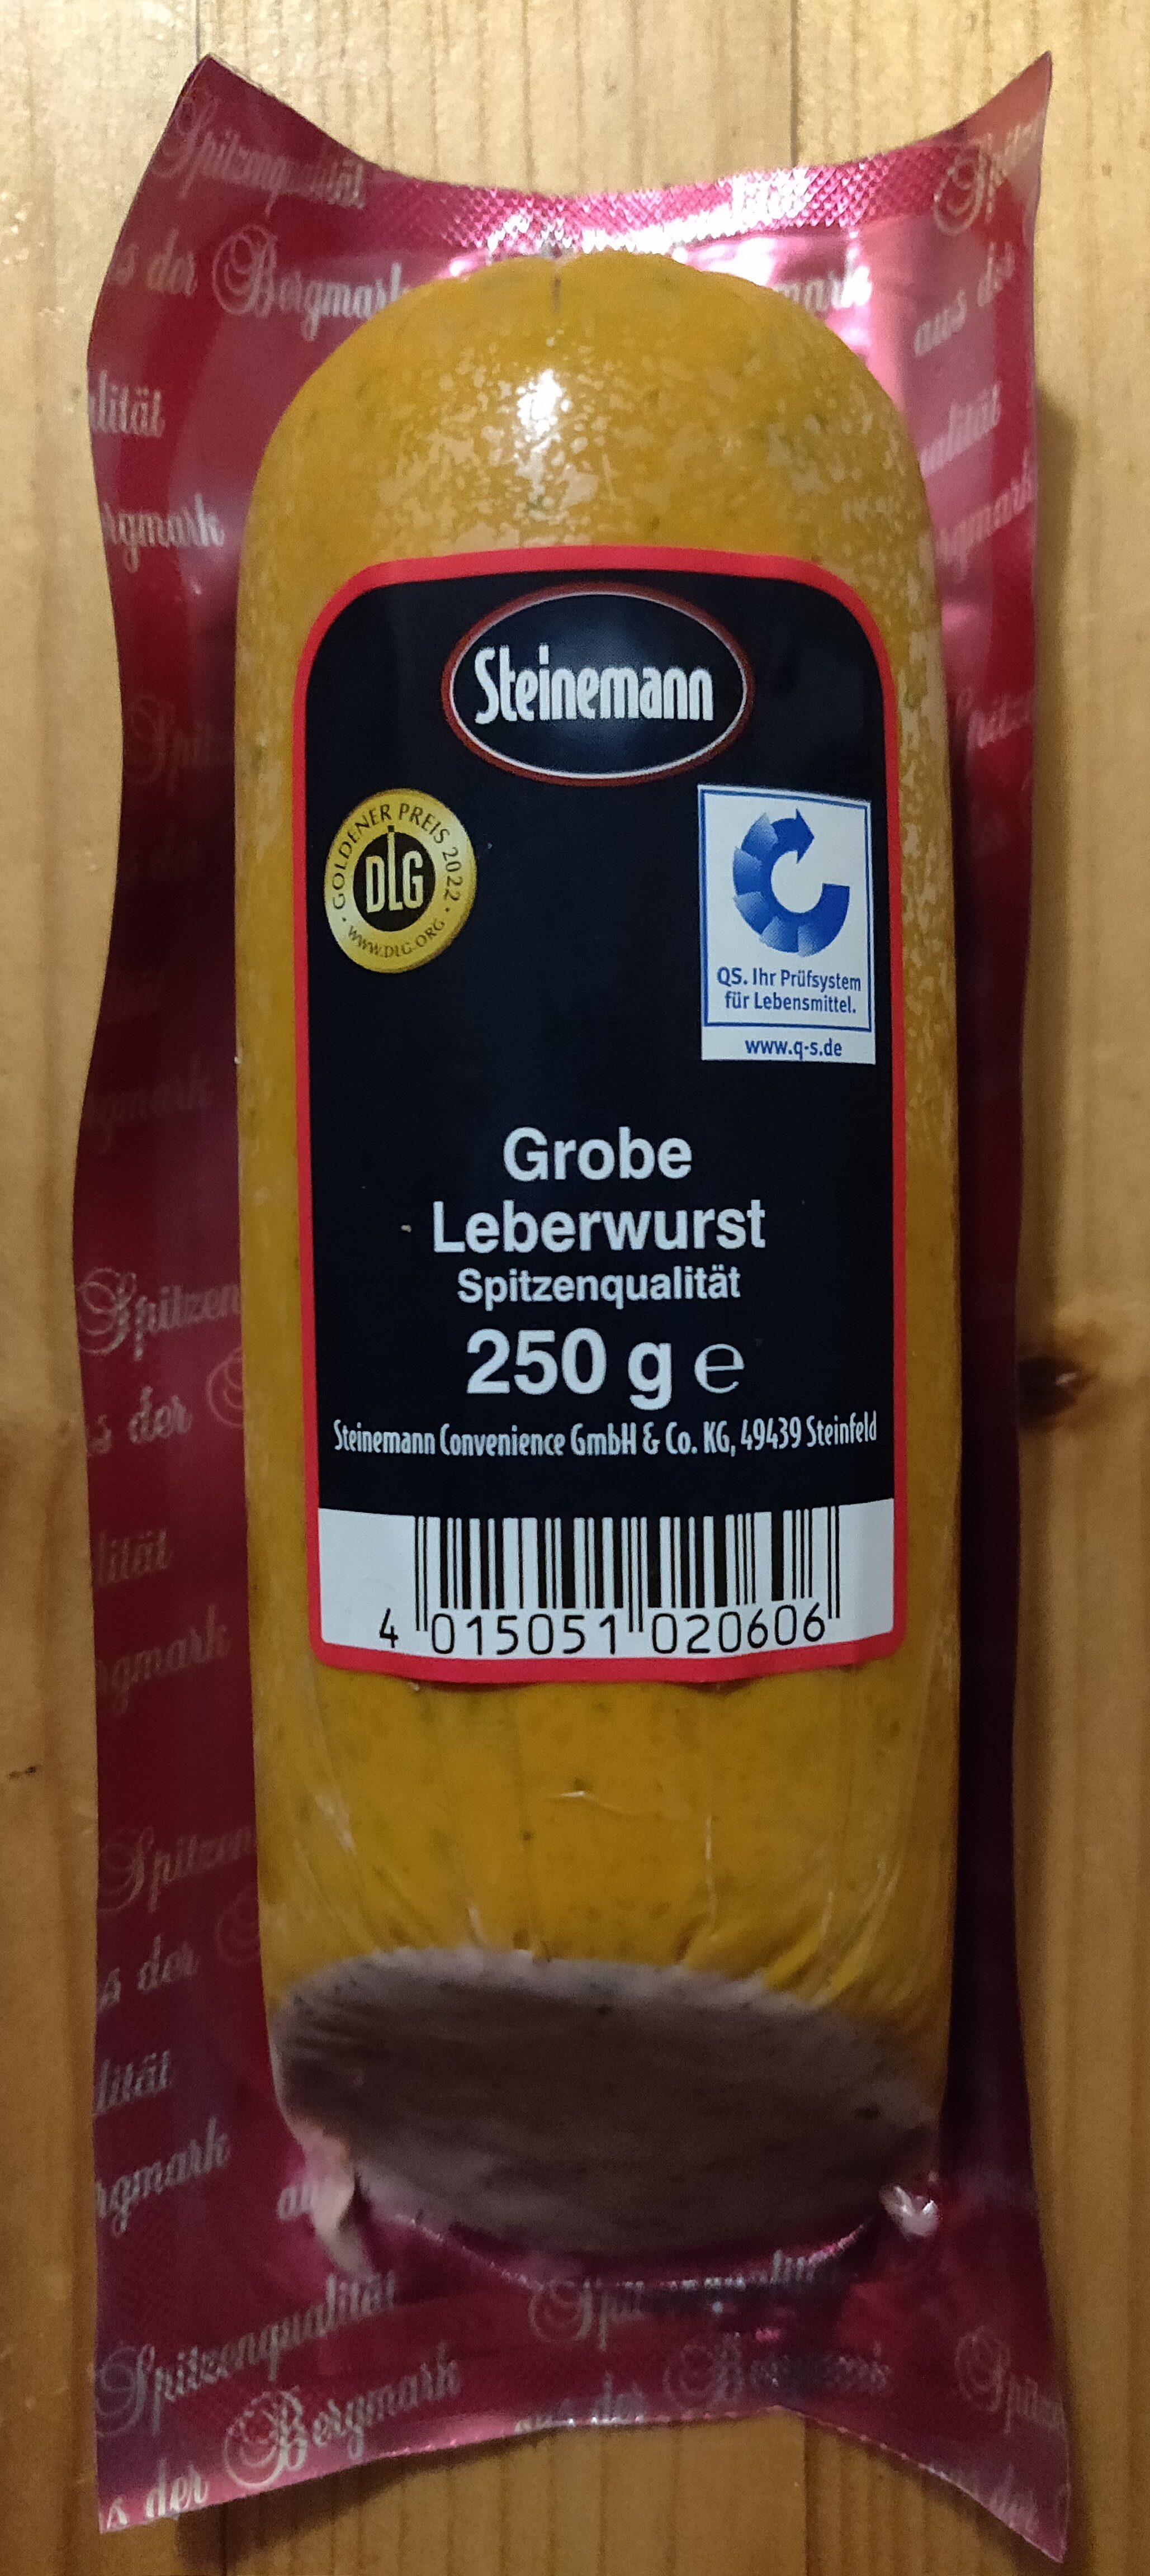 Grobe Leberwurst - Product - de